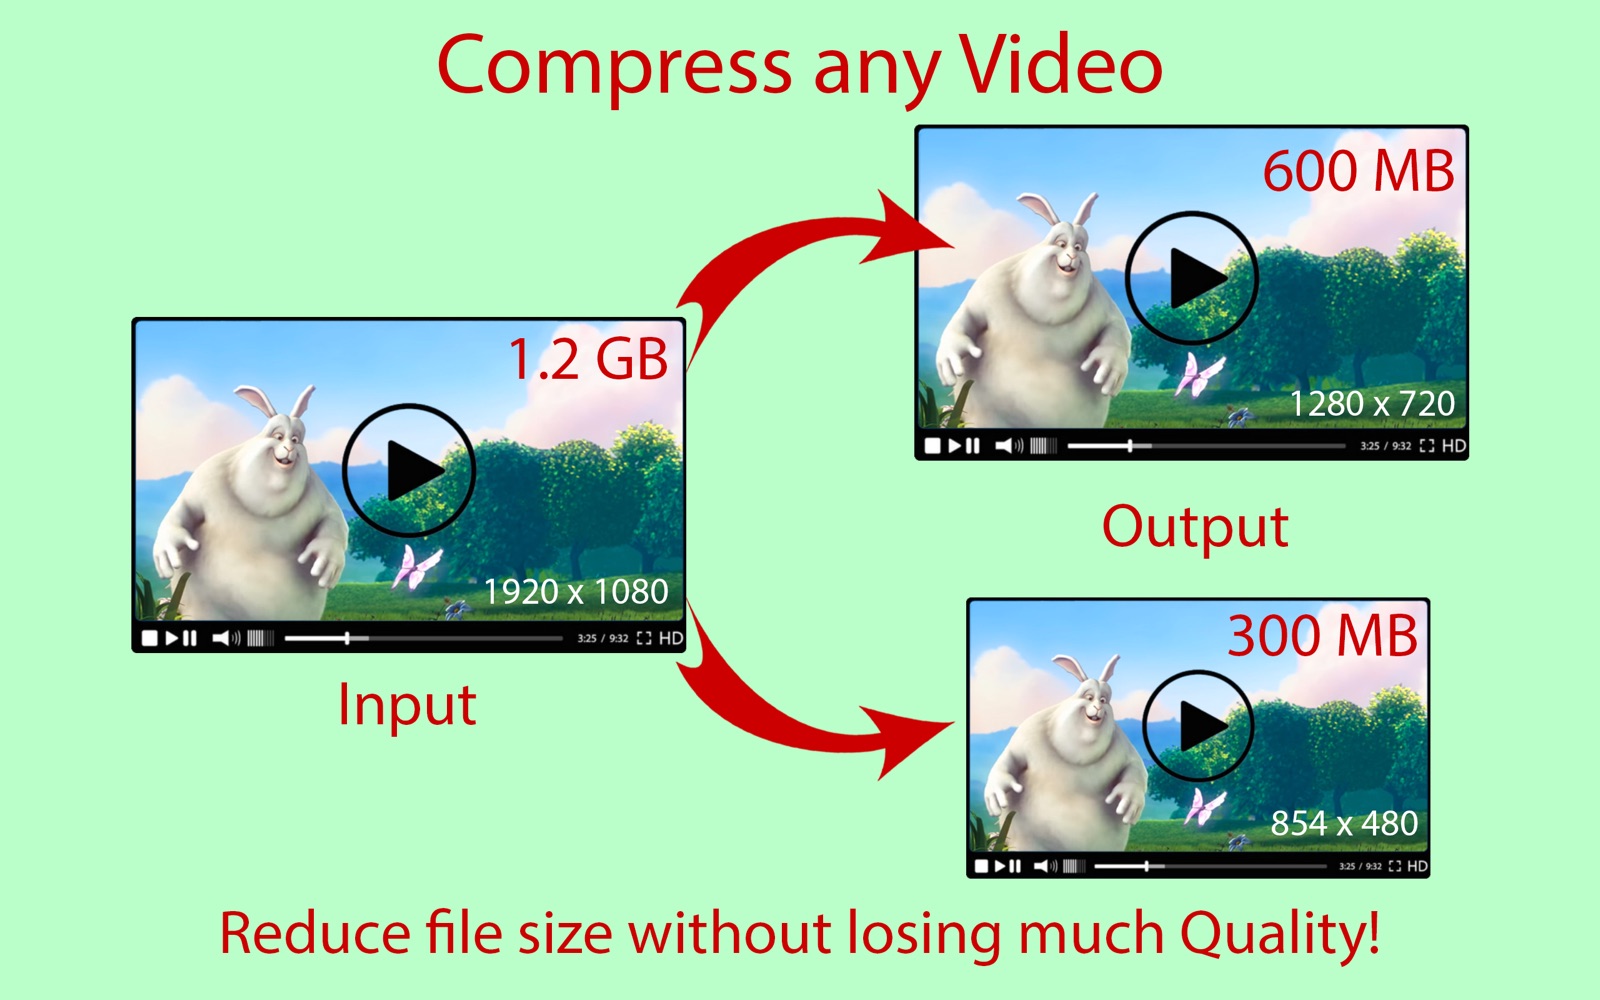 Compress Any Video 3.3 : Main Window